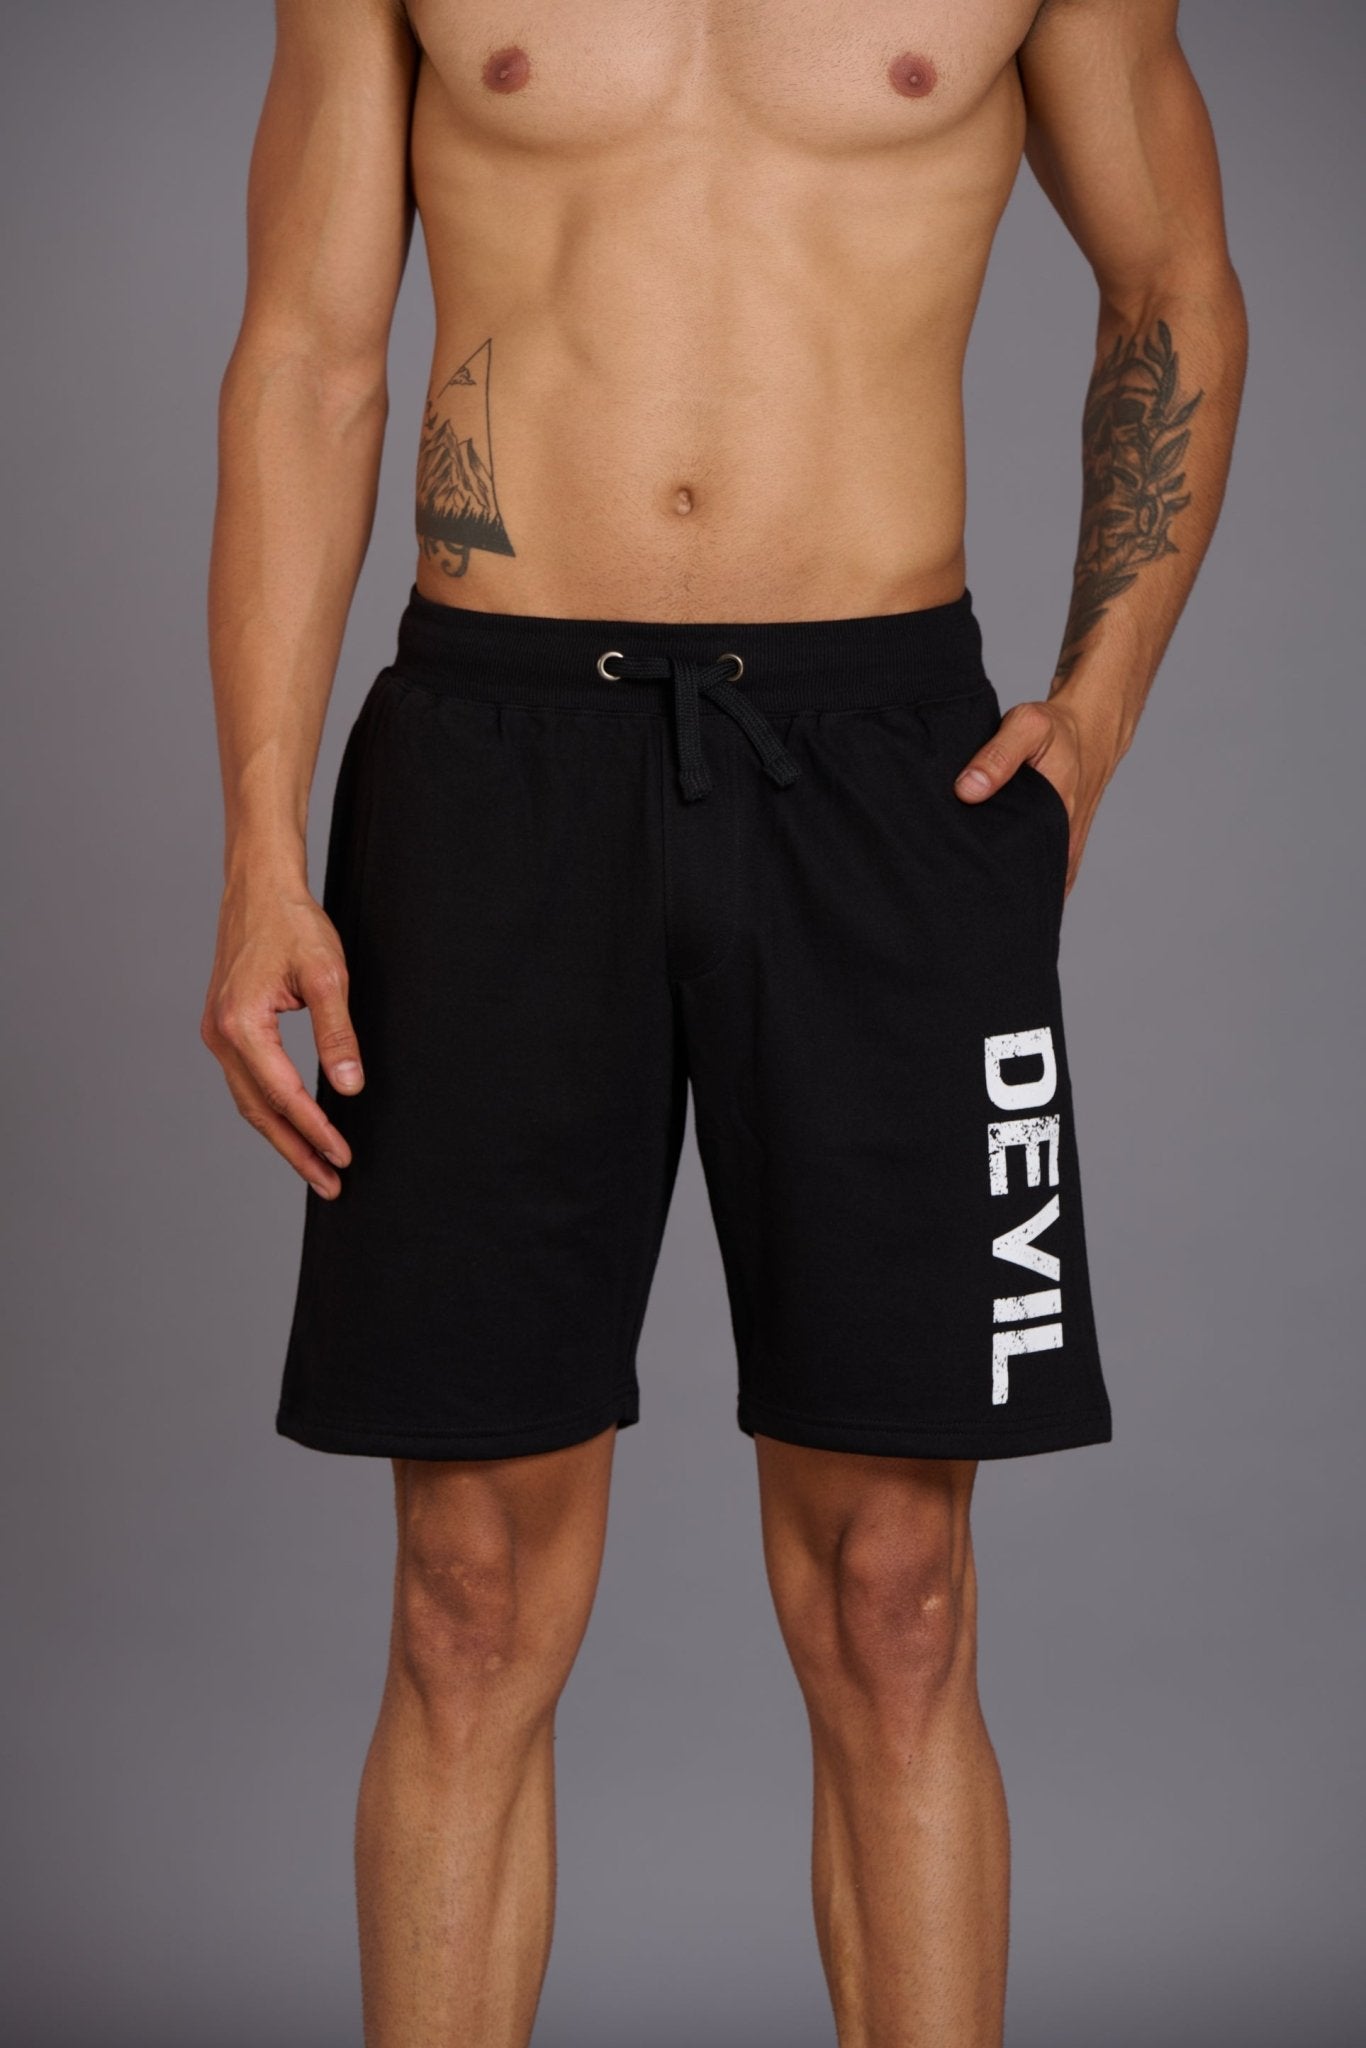 Devil Printed Black Shorts for Men - Go Devil